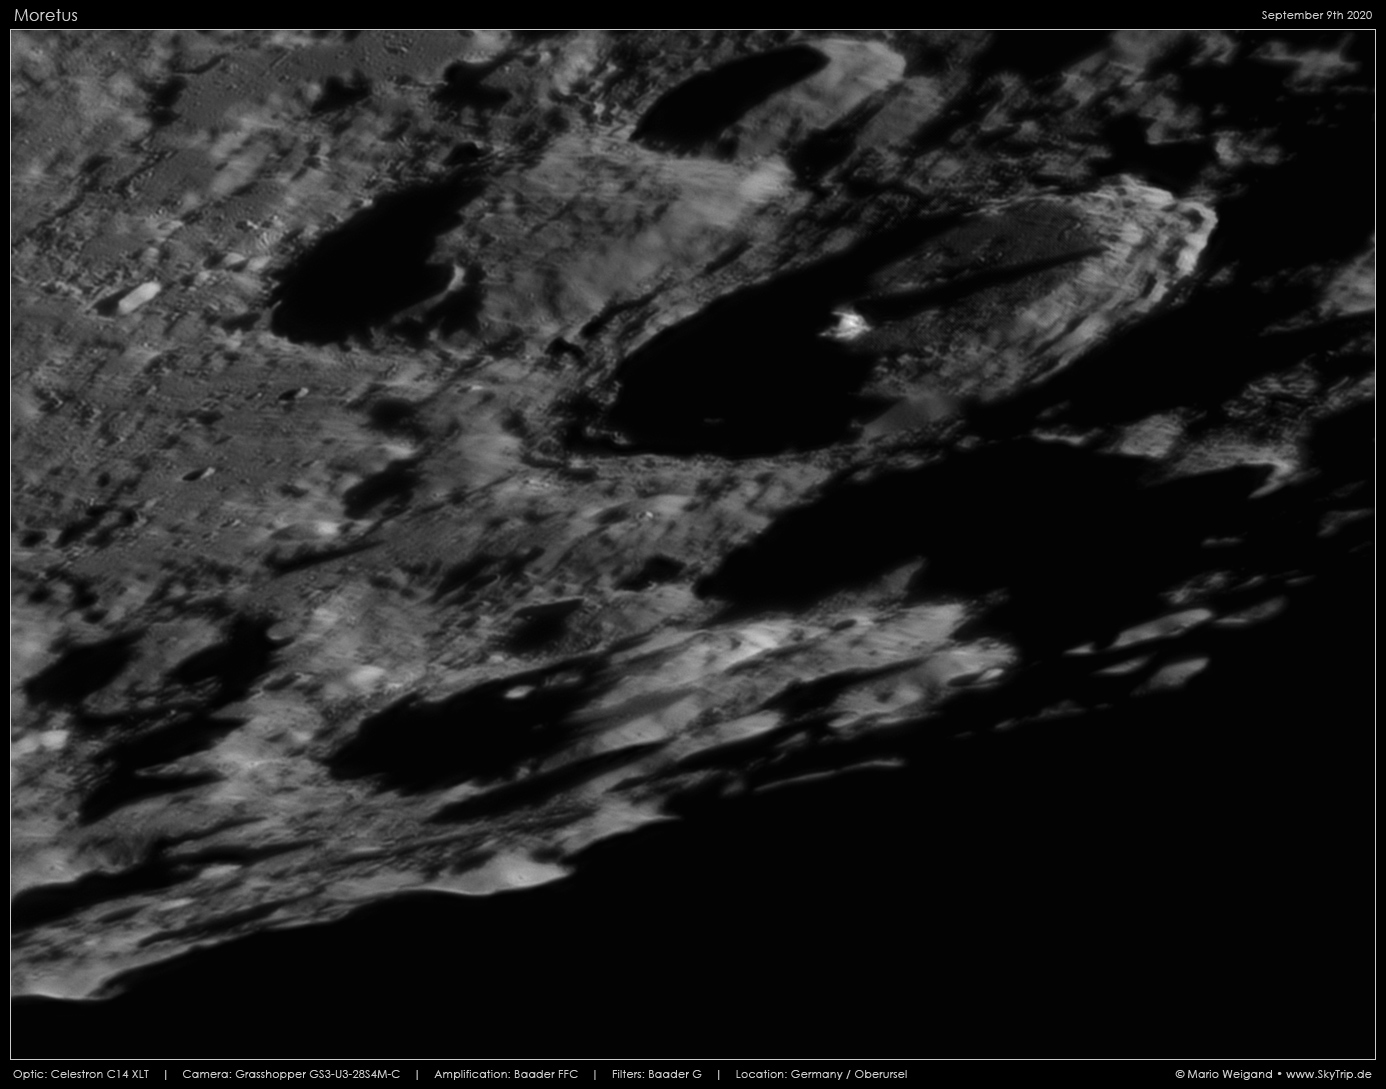 Mondfoto: Langer Schatten in Moretus